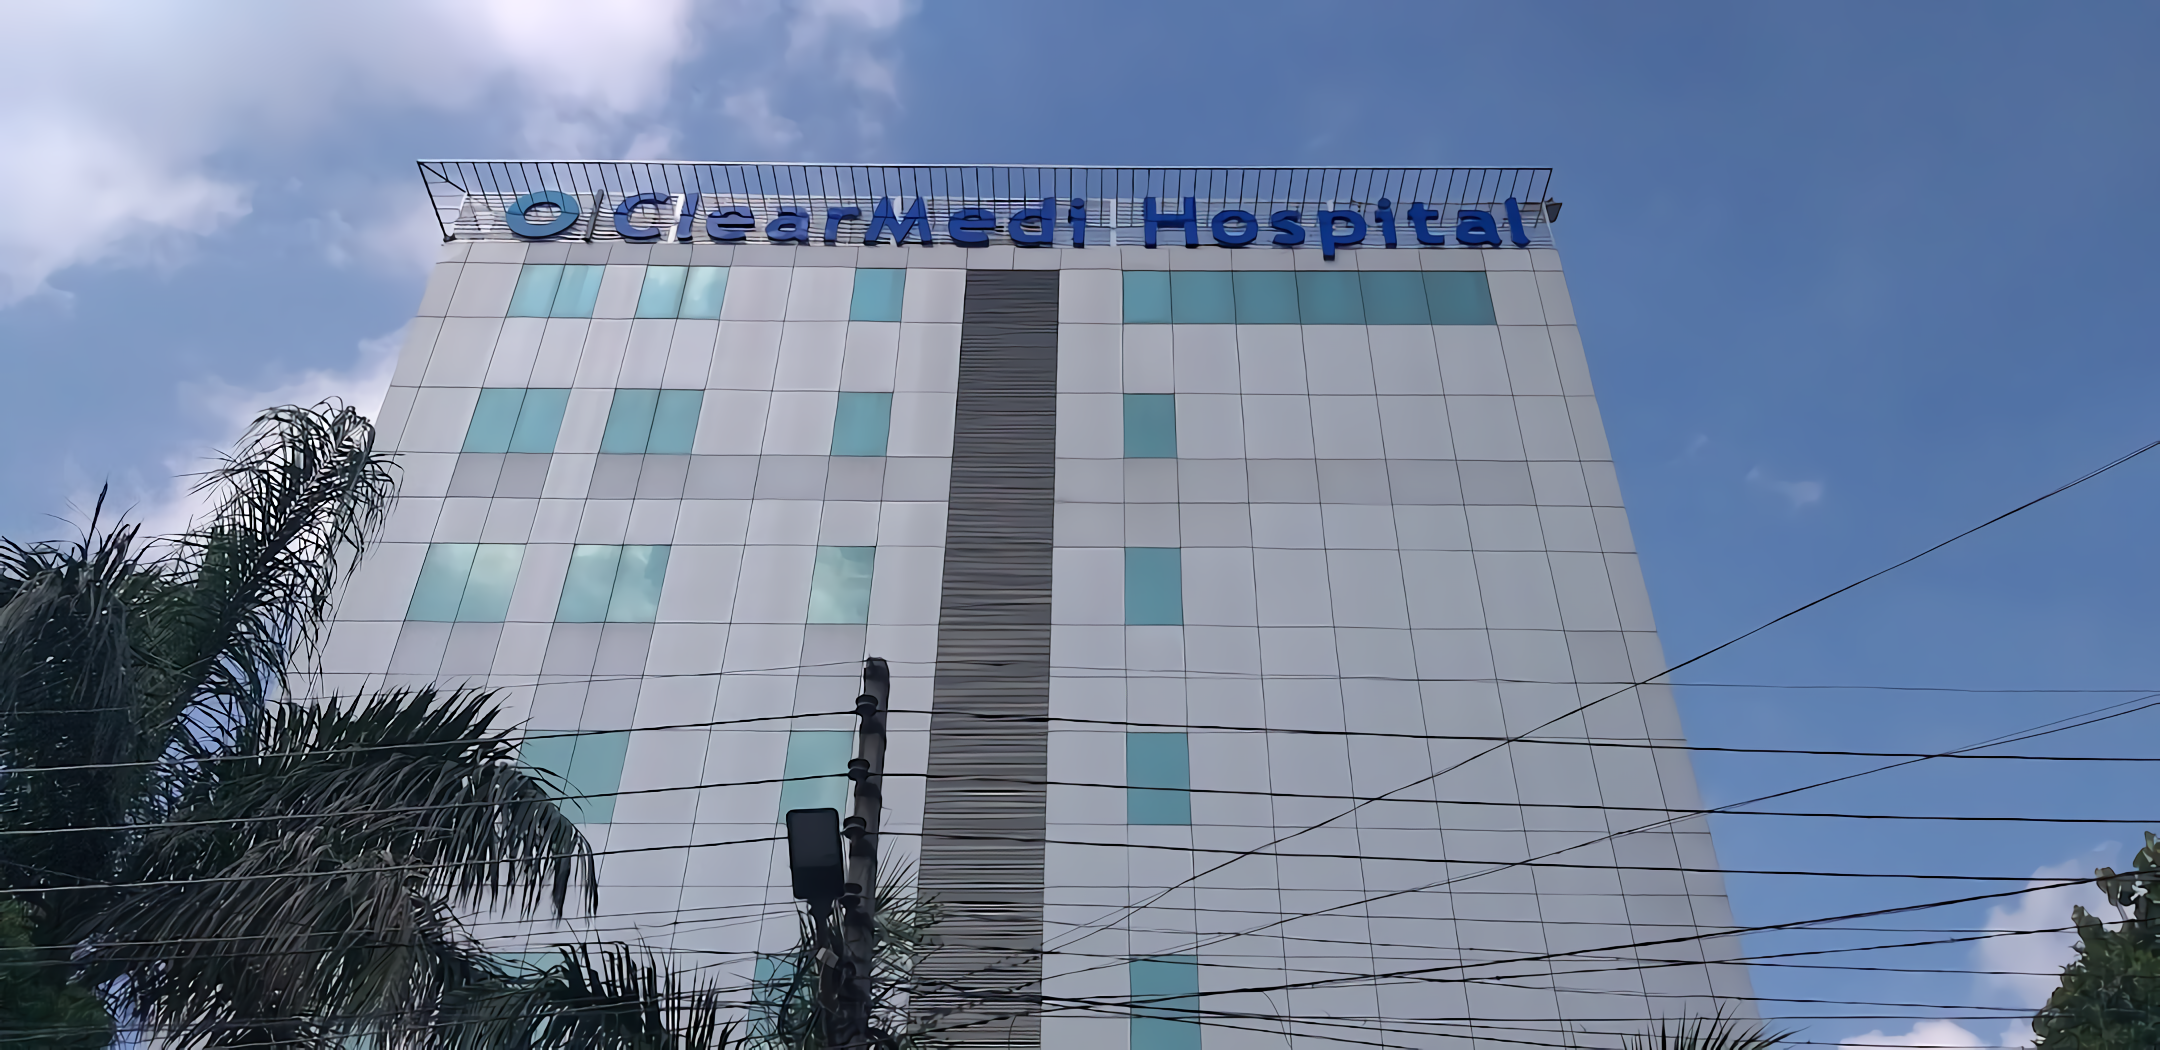 Clearmedi Hospital And Cancer Centre - Vasundhara photo